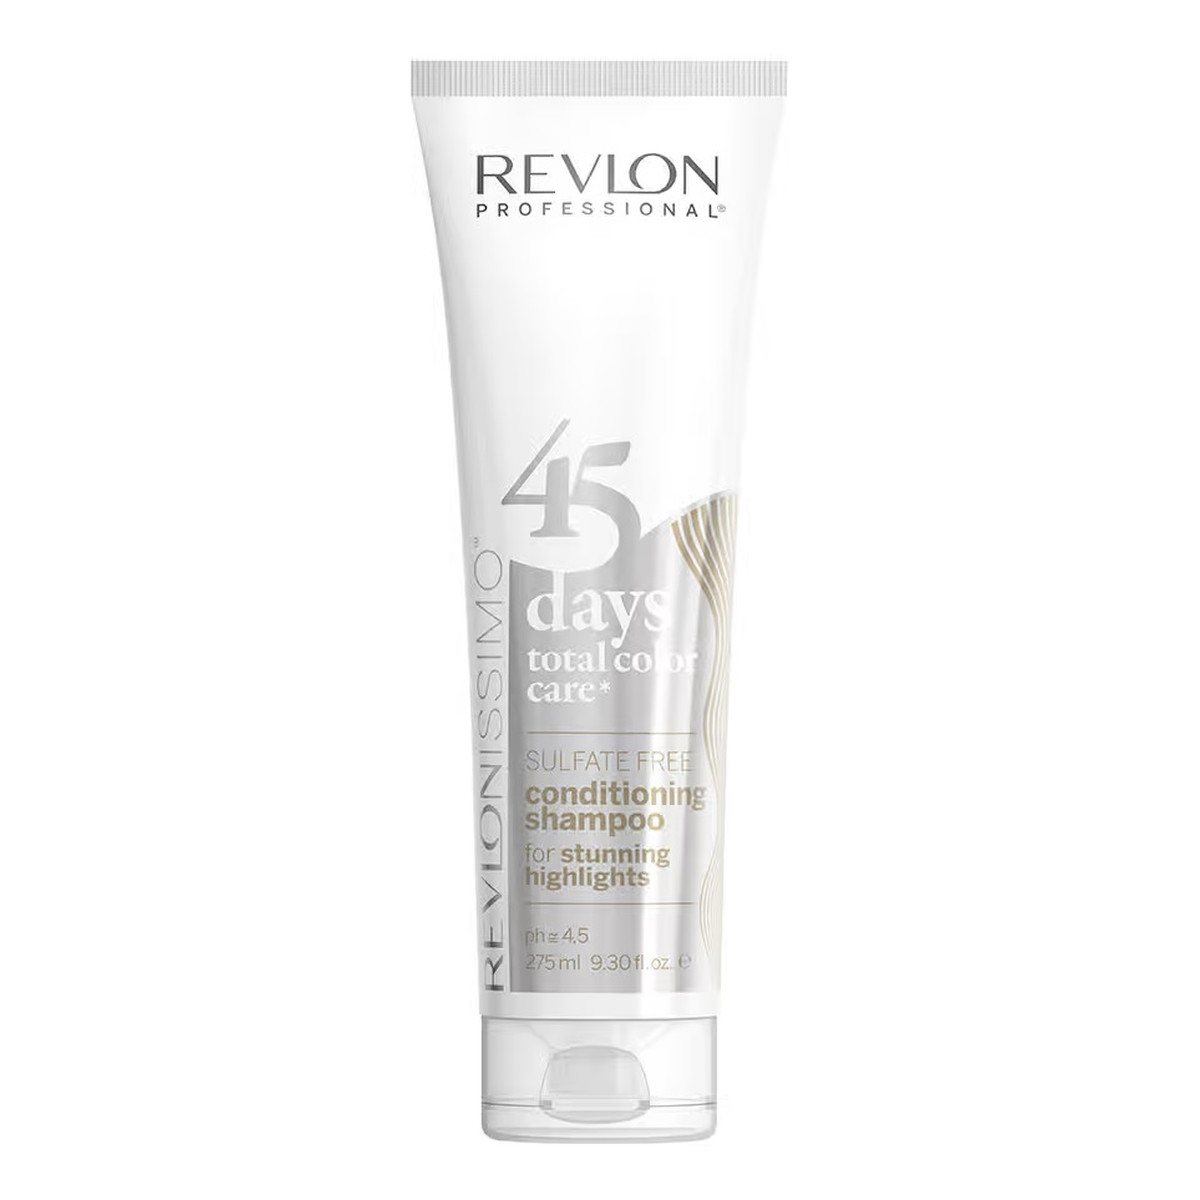 Revlon Revlonissimo 45 days conditioning shampoo szampon i odżywka podtrzymująca kolor stunning highlights 275ml